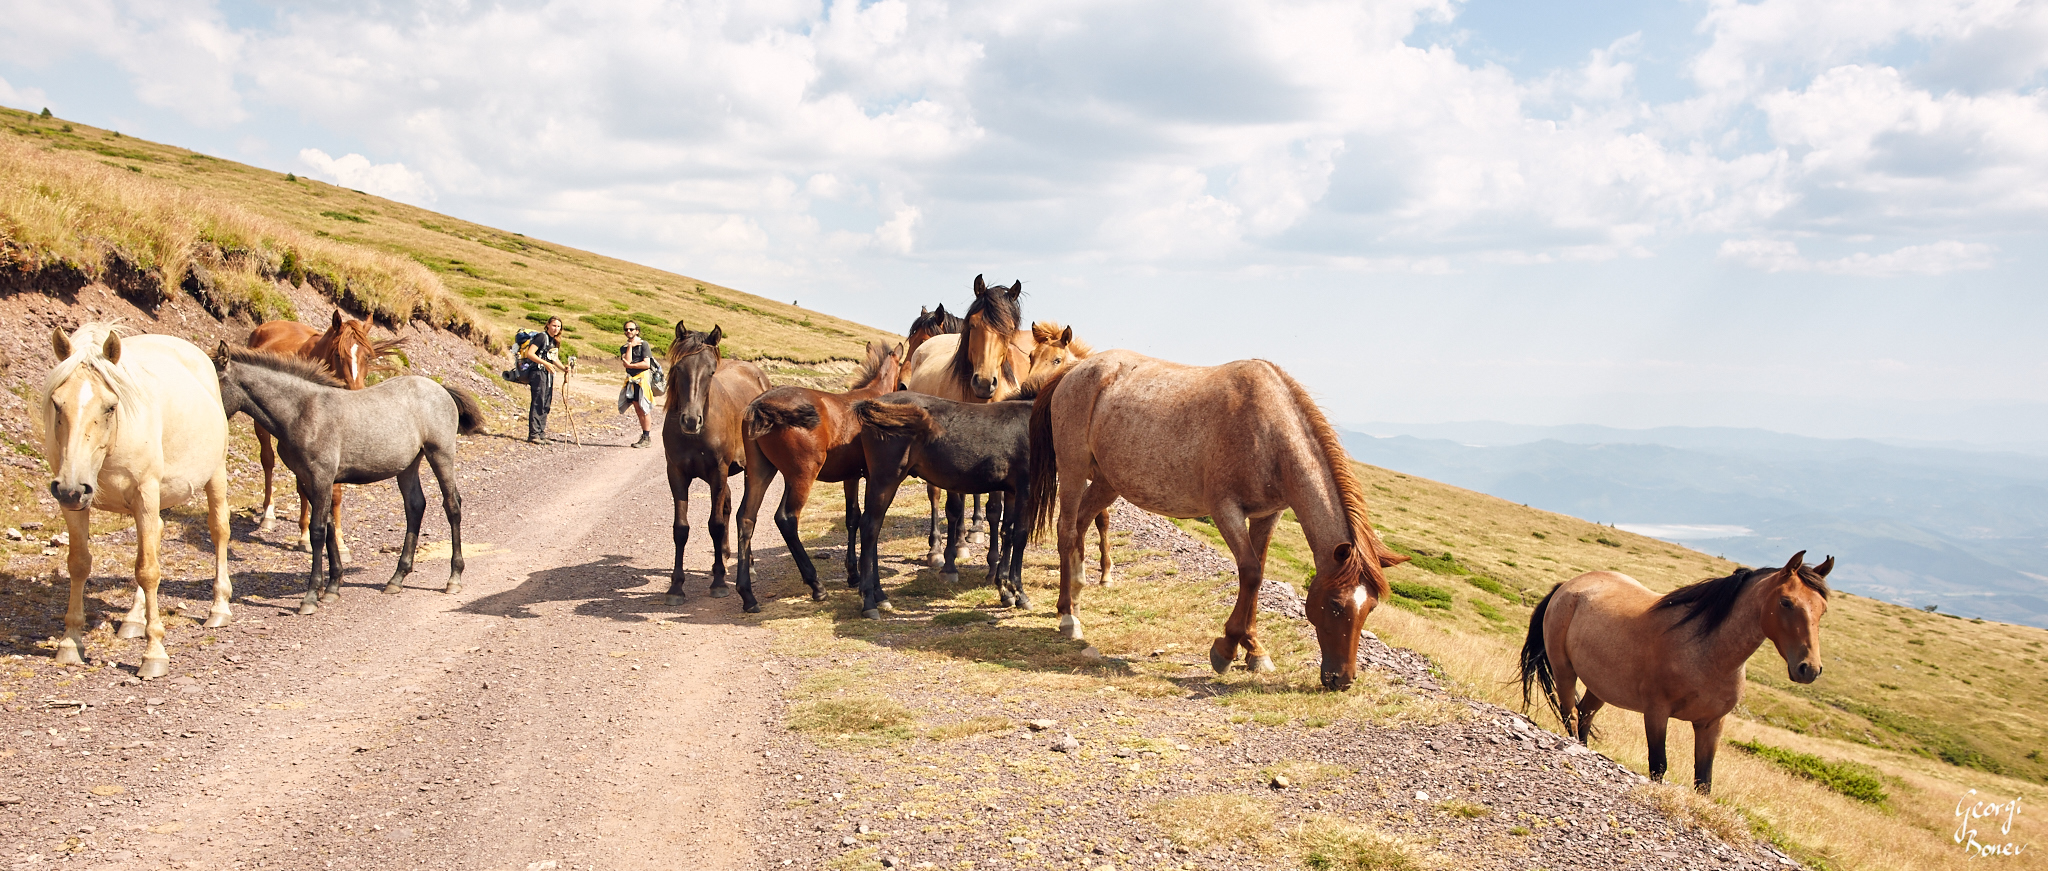 The wild horses of Mt. Stara Planina, Bulgaria